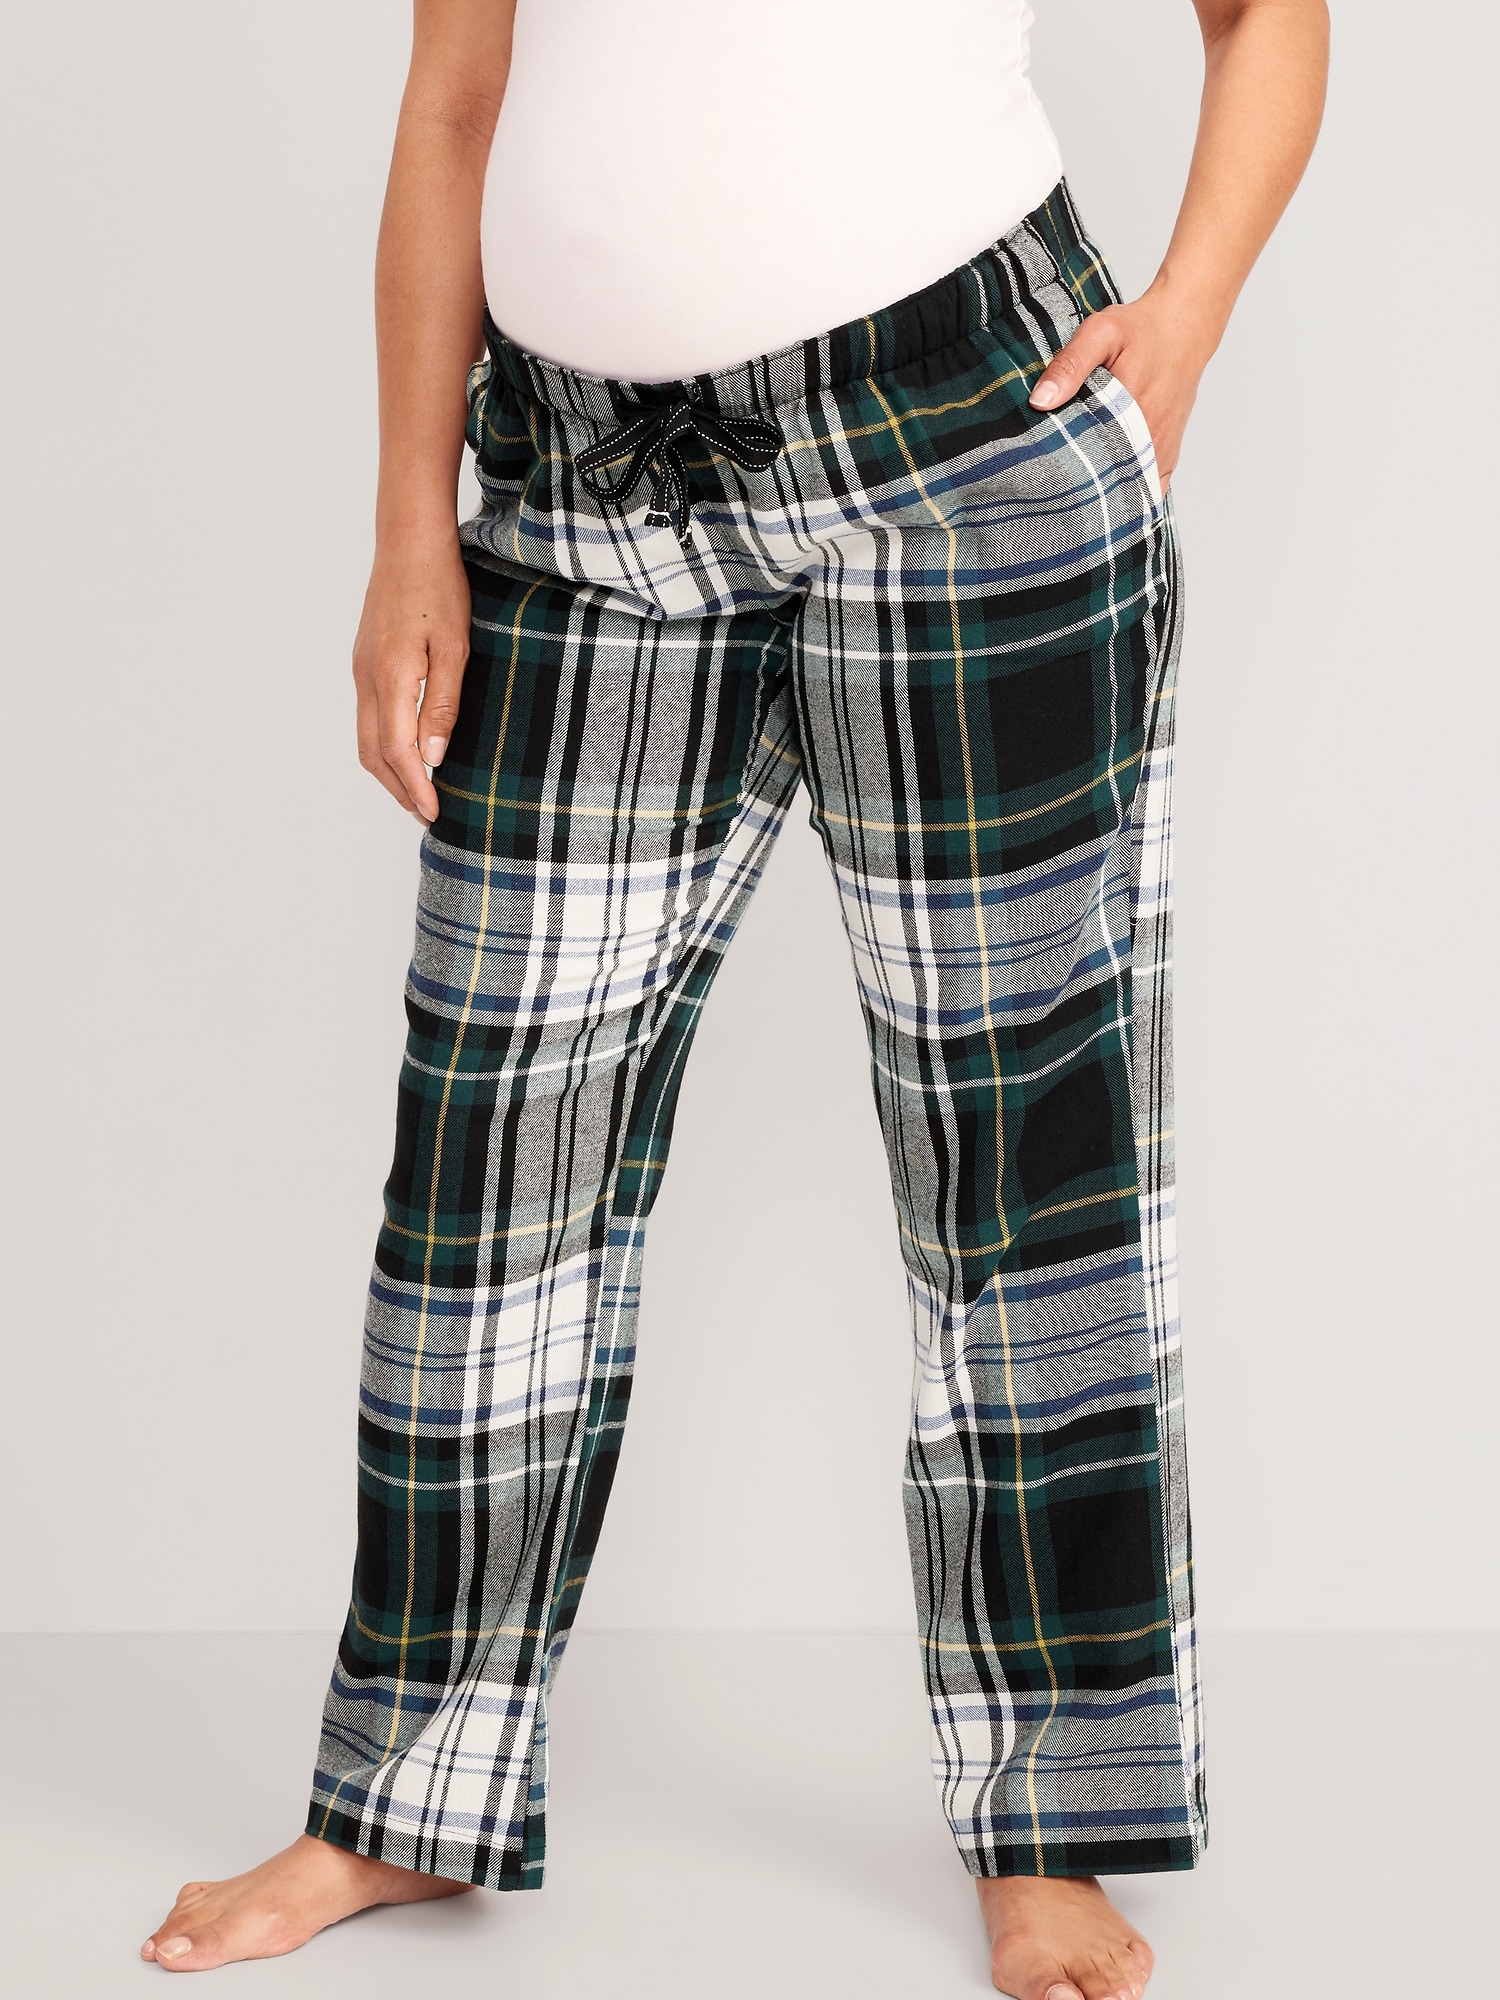 Flannel Pajama Pant  Flannel pajama pants Pajama pant Flannel pajamas